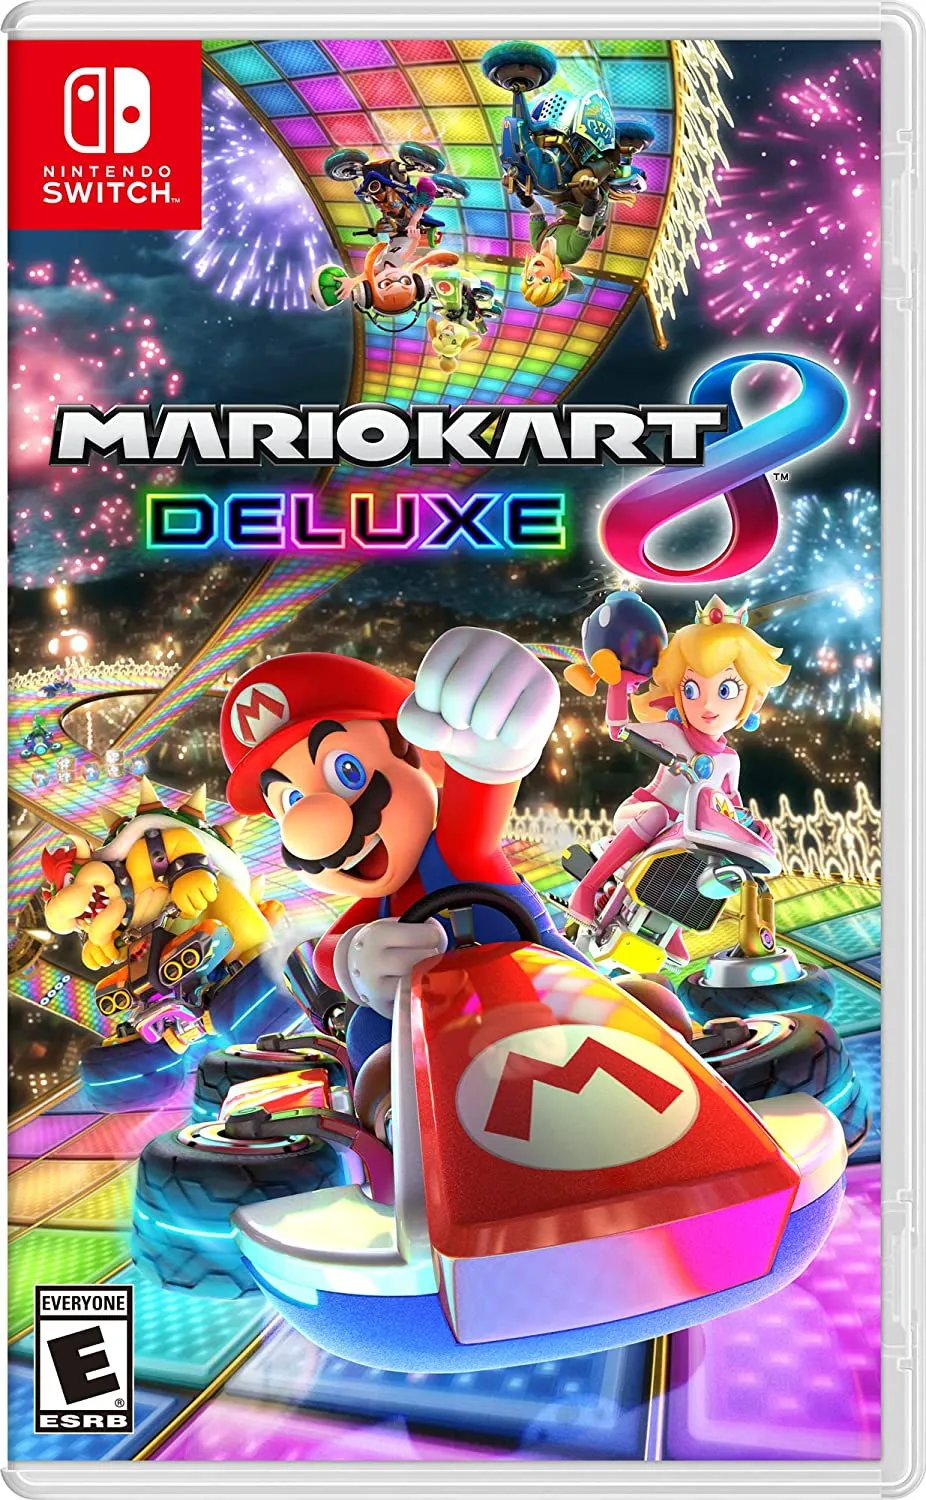 Illustration du jeu Mario Kart 8 Deluxe.